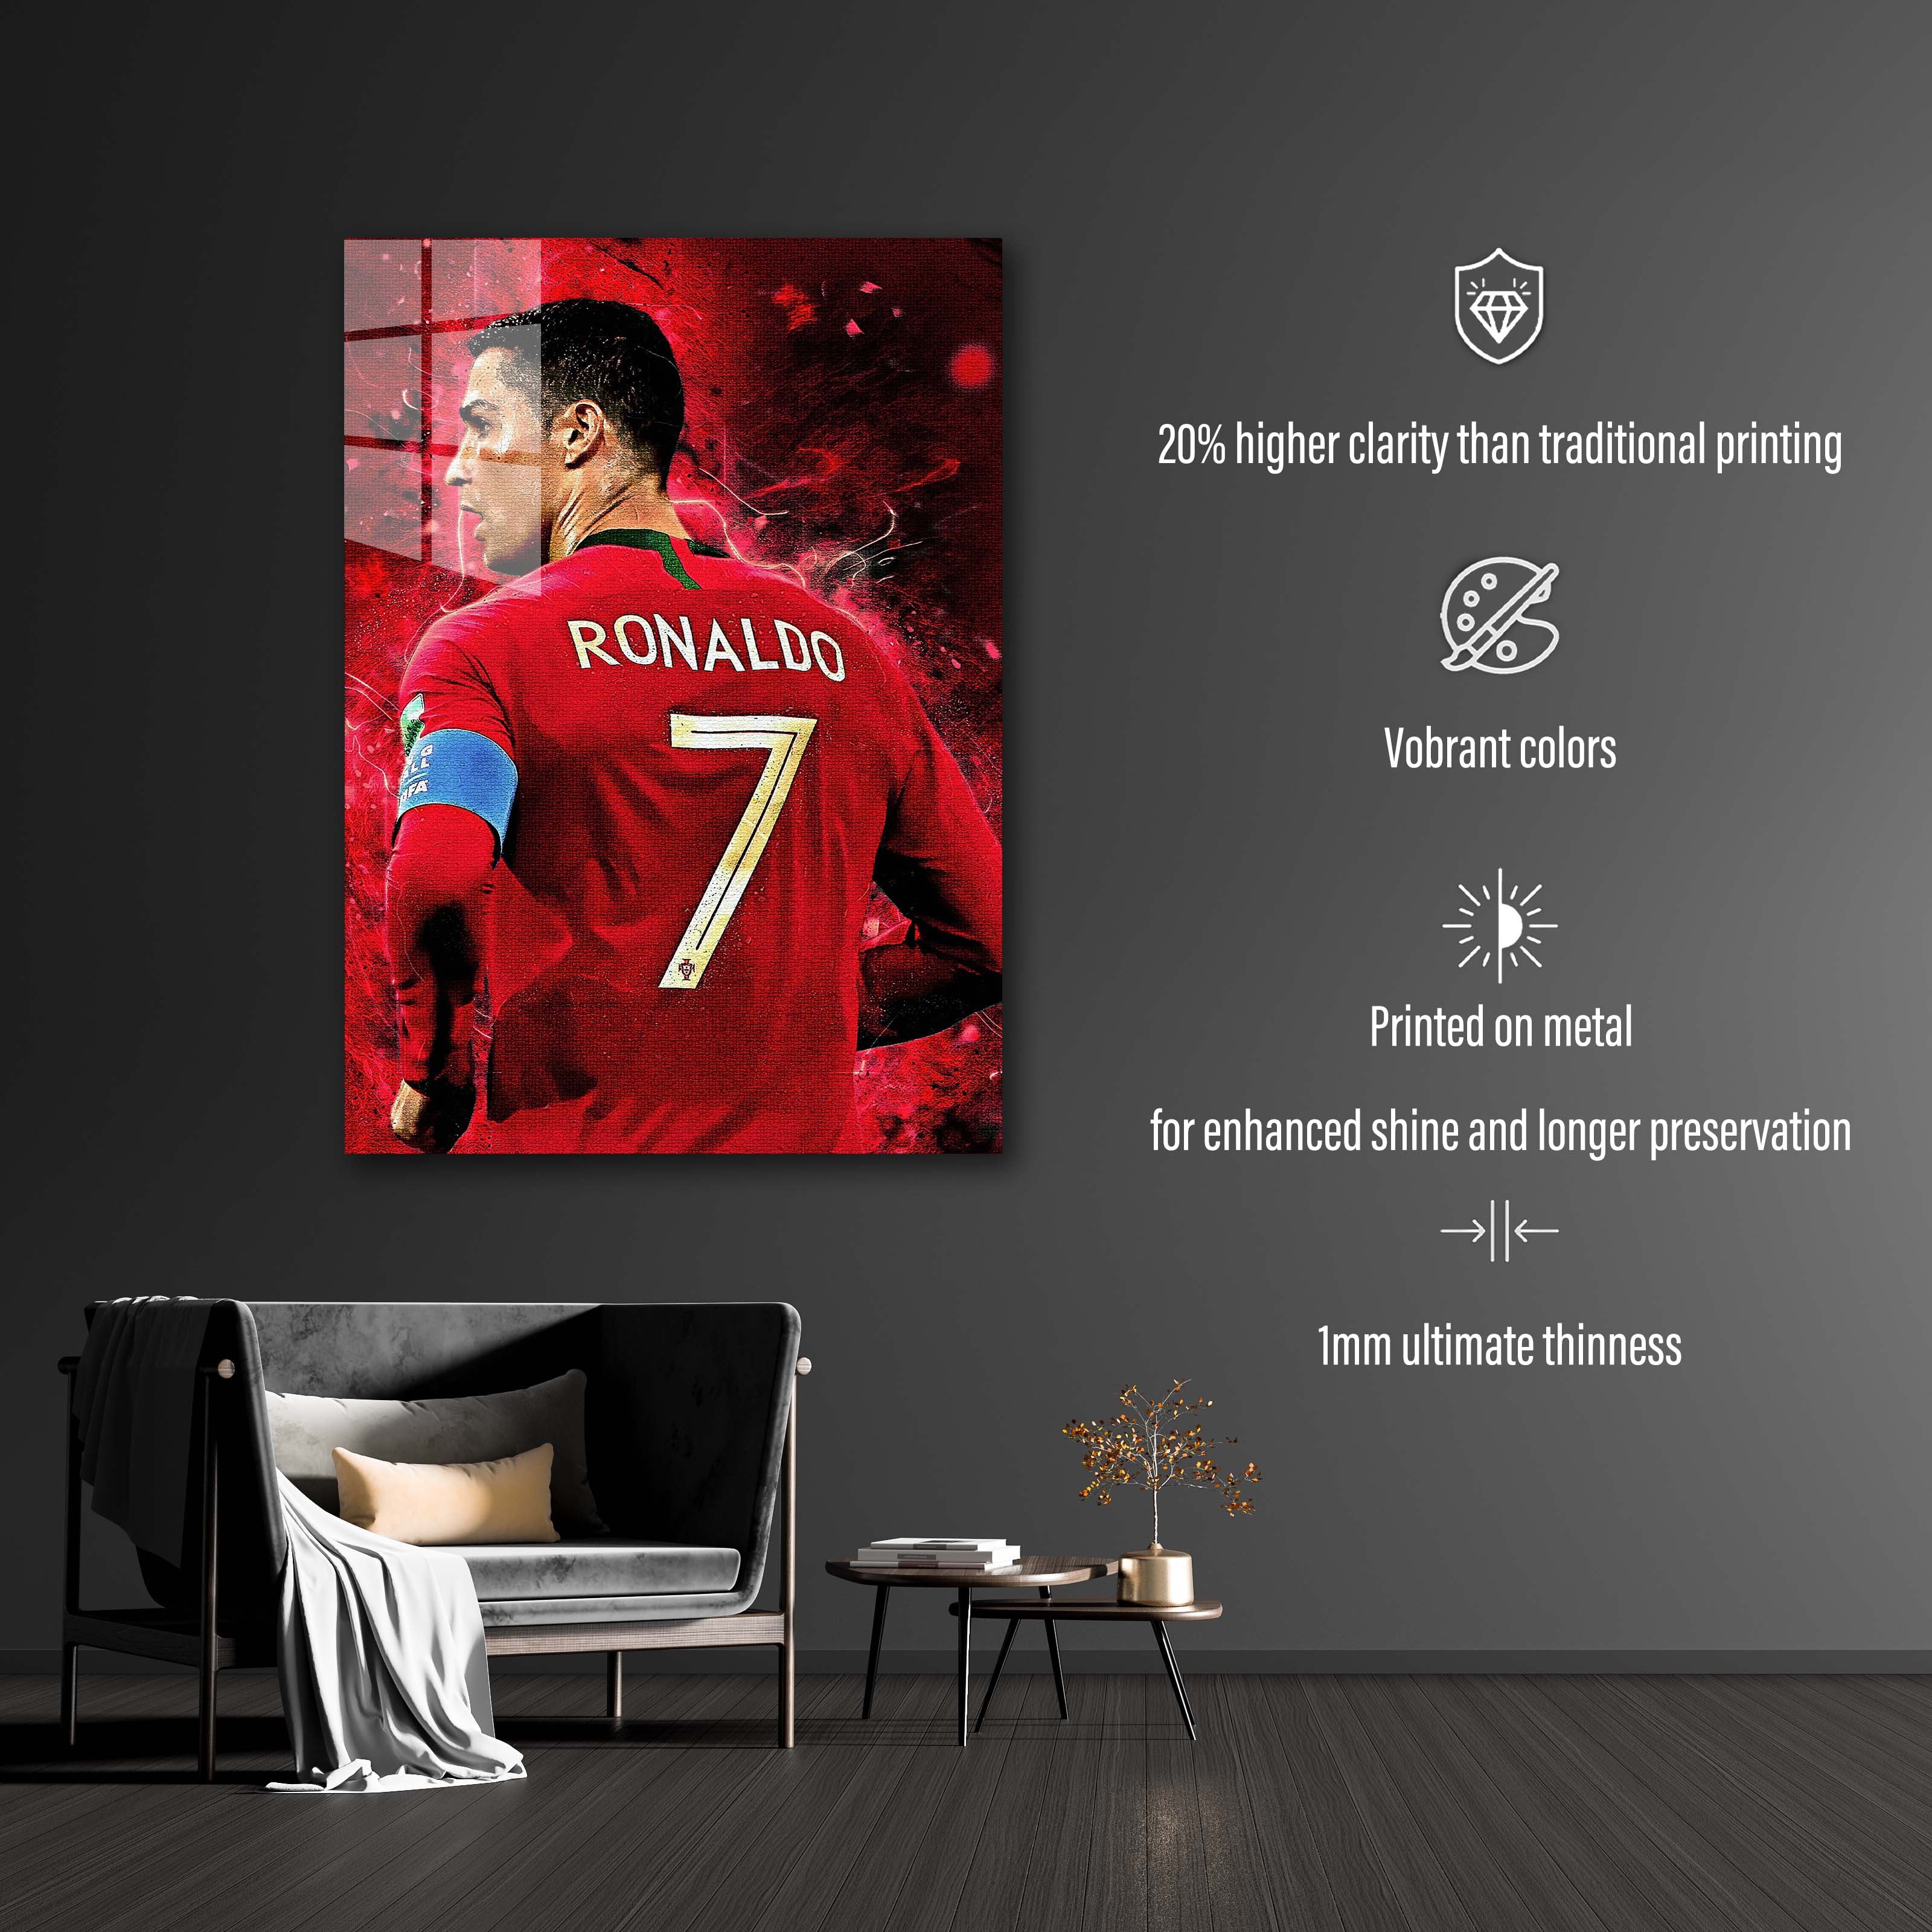 Ronaldo Cristiano-designed by @DynCreative